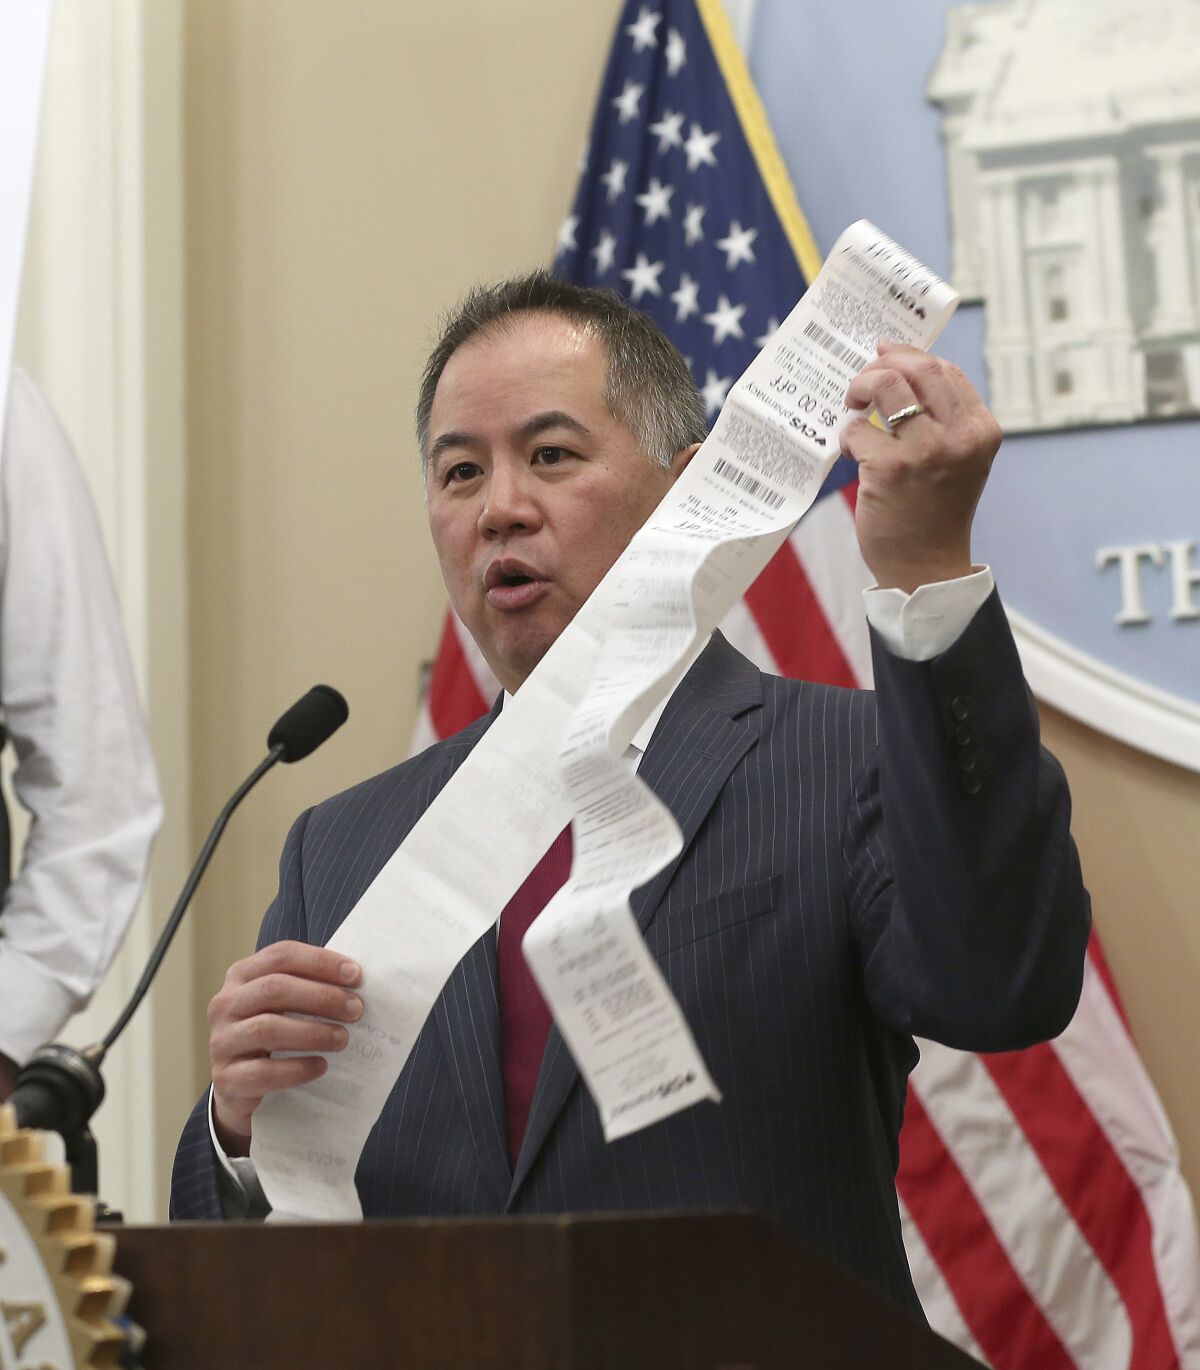 Assemblyman Phil Ting (D-San Francisco) holds a long paper receipt.